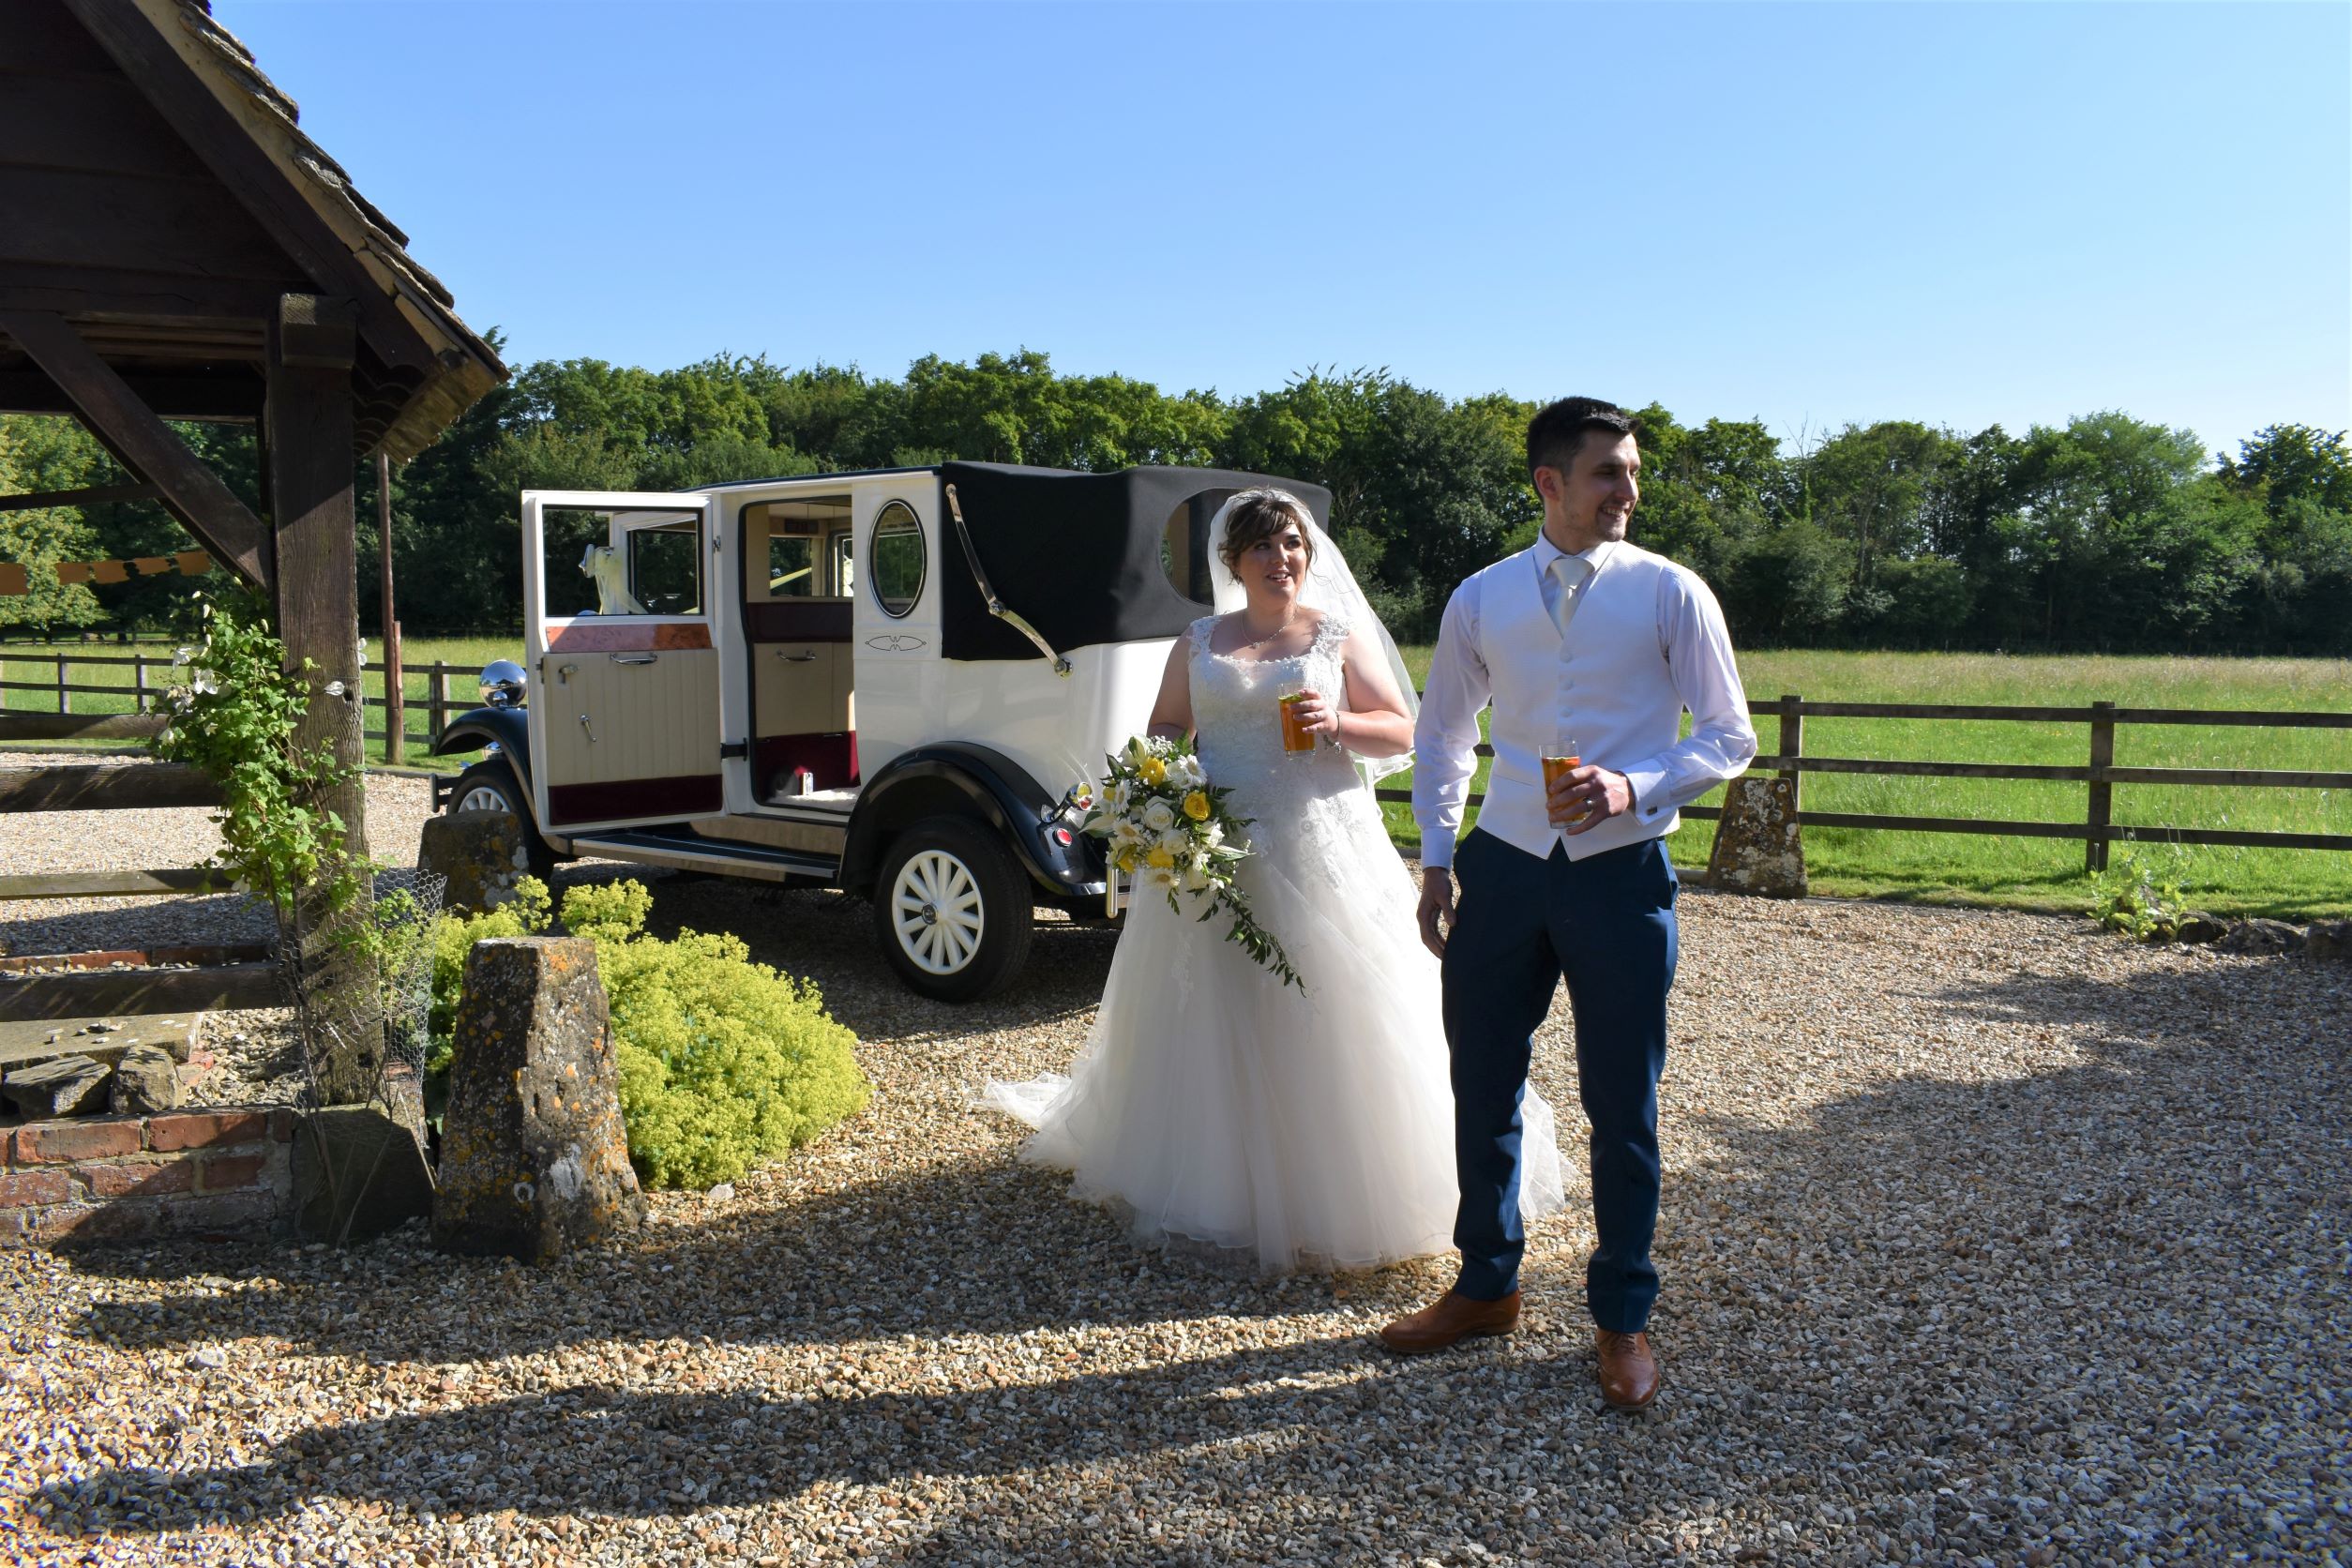 Spittleborough Farmhouse wedding reception for Leanne & Thomas